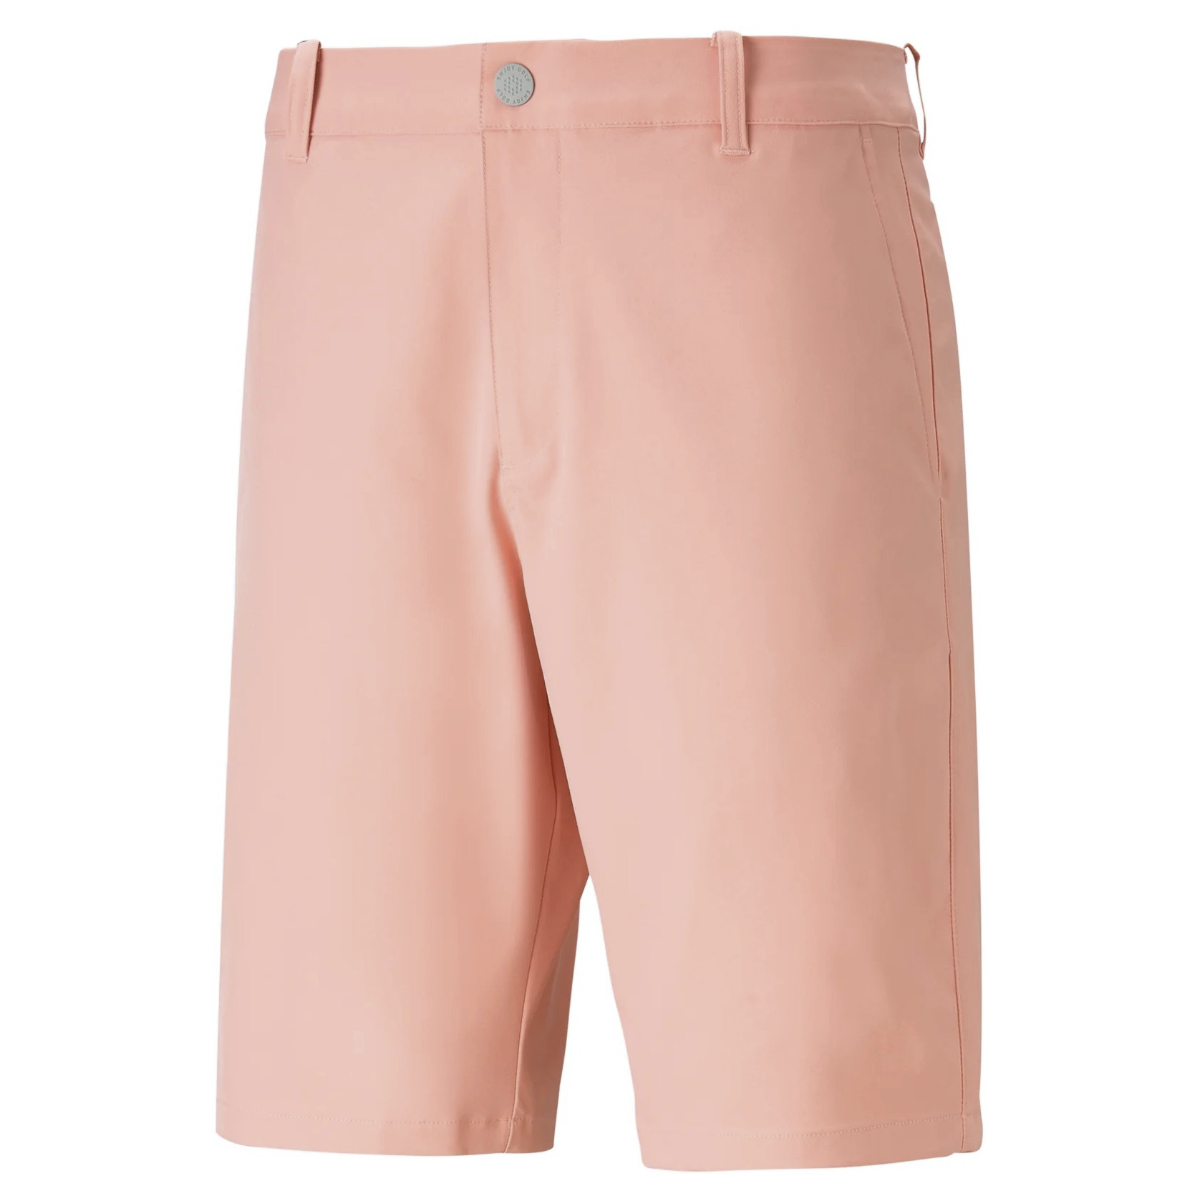 Puma Dealer 10 Inch Shorts Pink